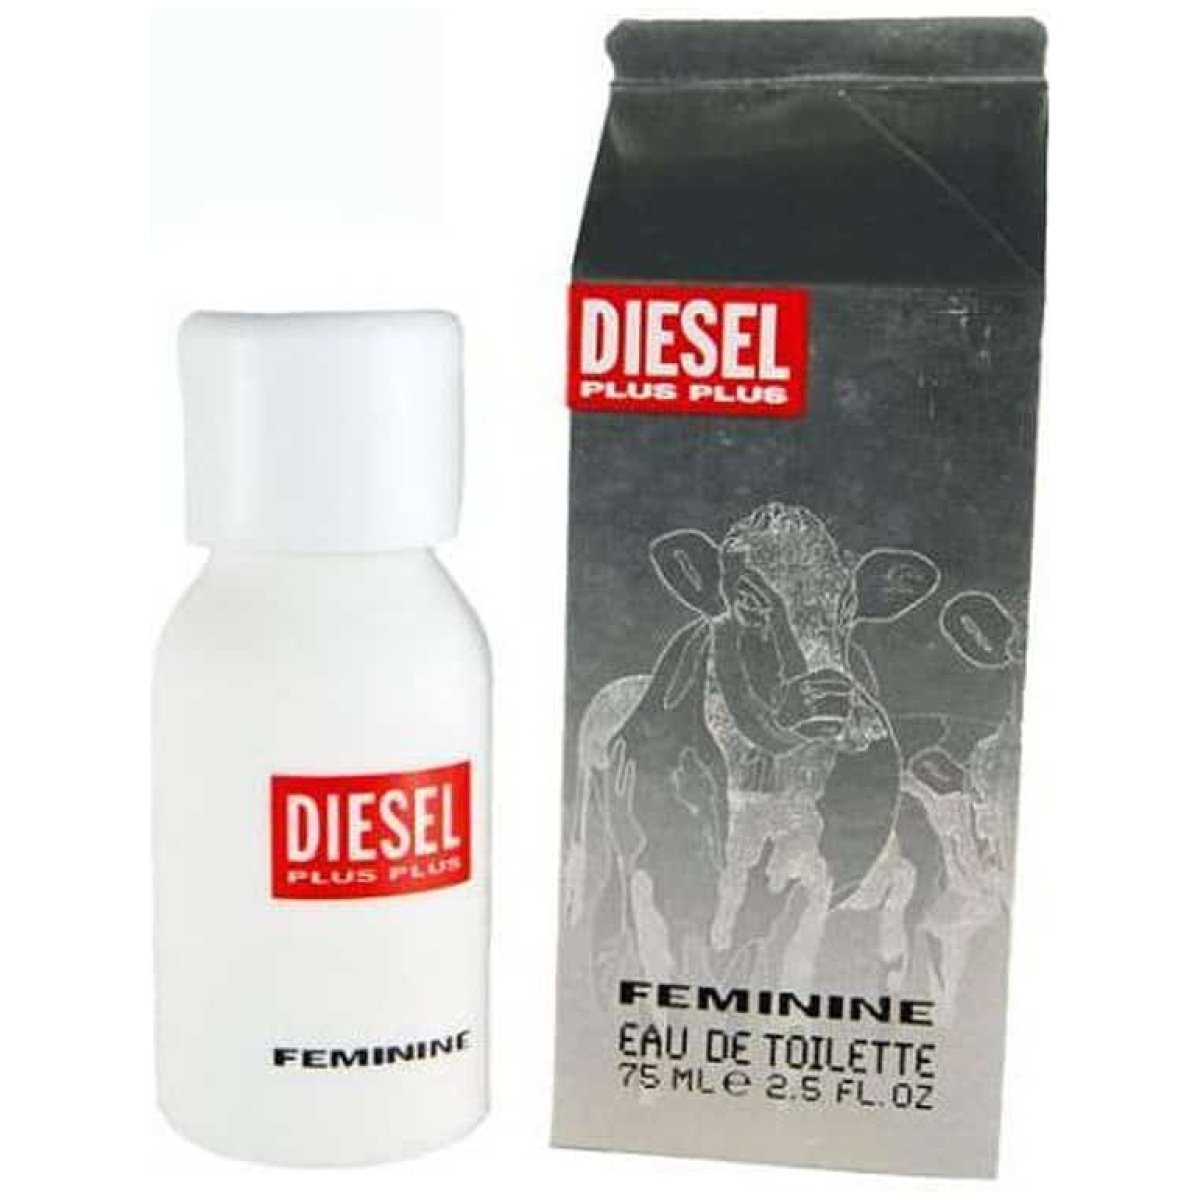 Diesel Plus Plus Feminine EDT Perfume 75ml